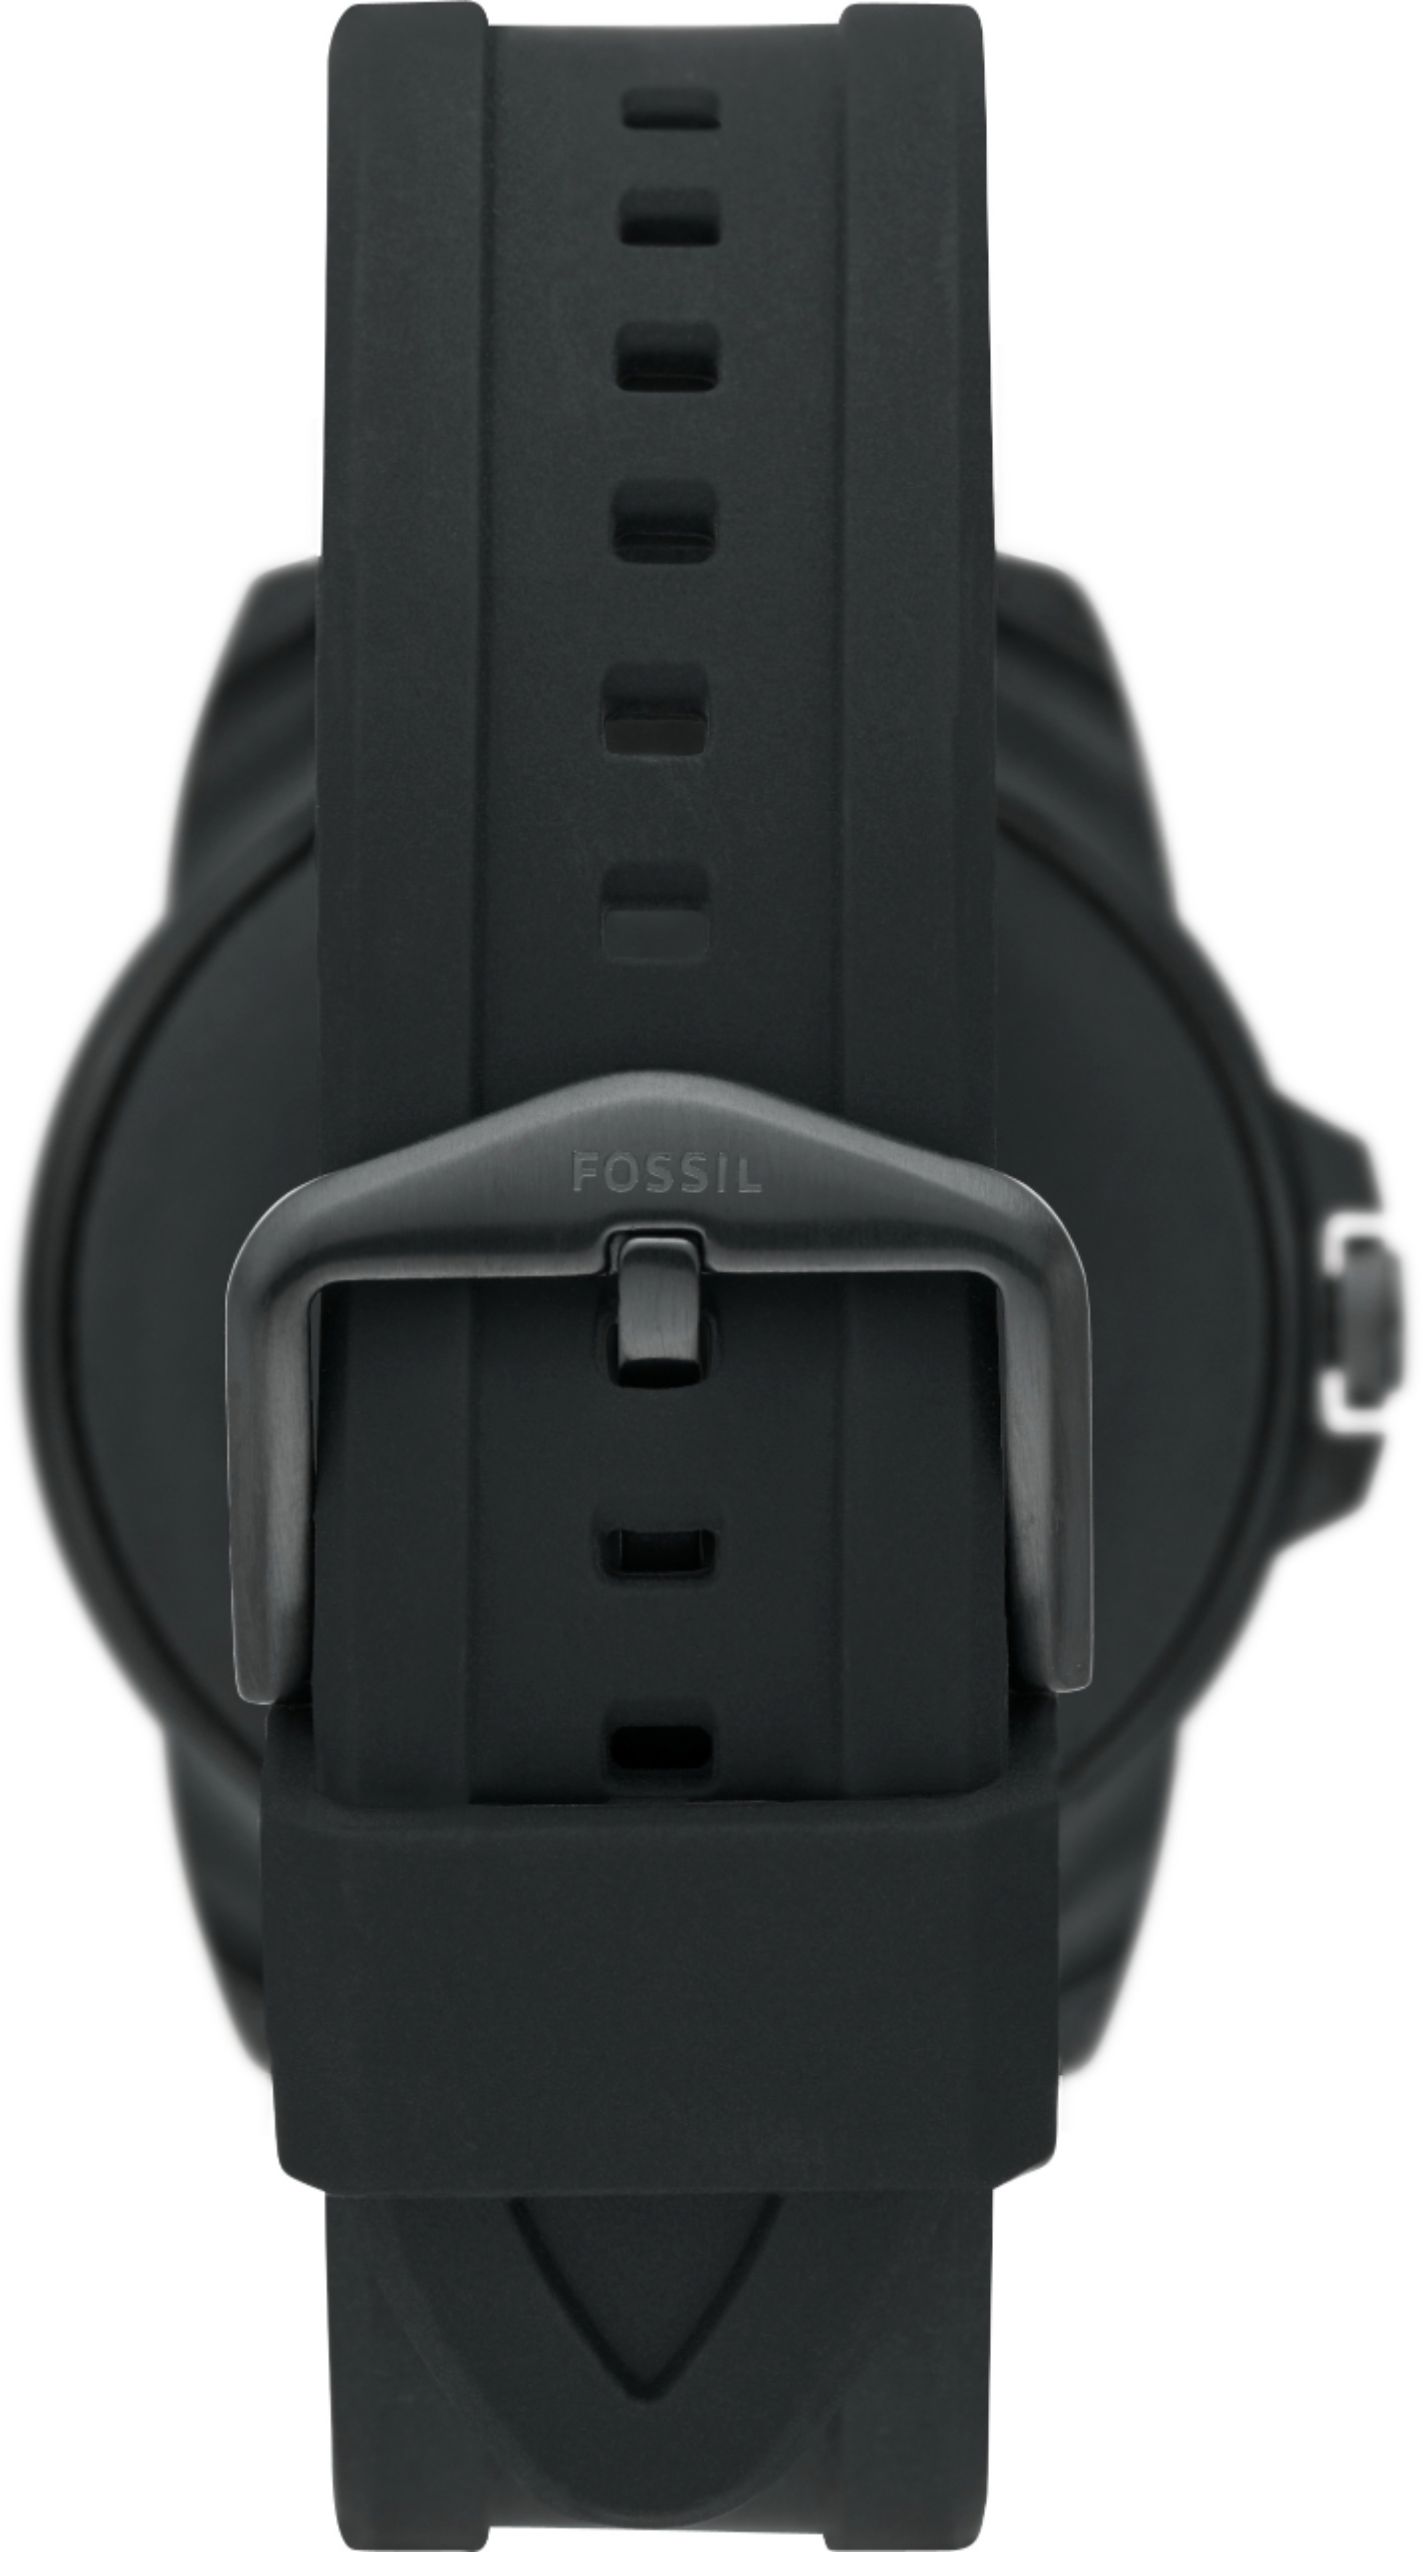 Fossil Gen 5e Smartwatch 44mm Silicone Black FTW4047 - Best Buy